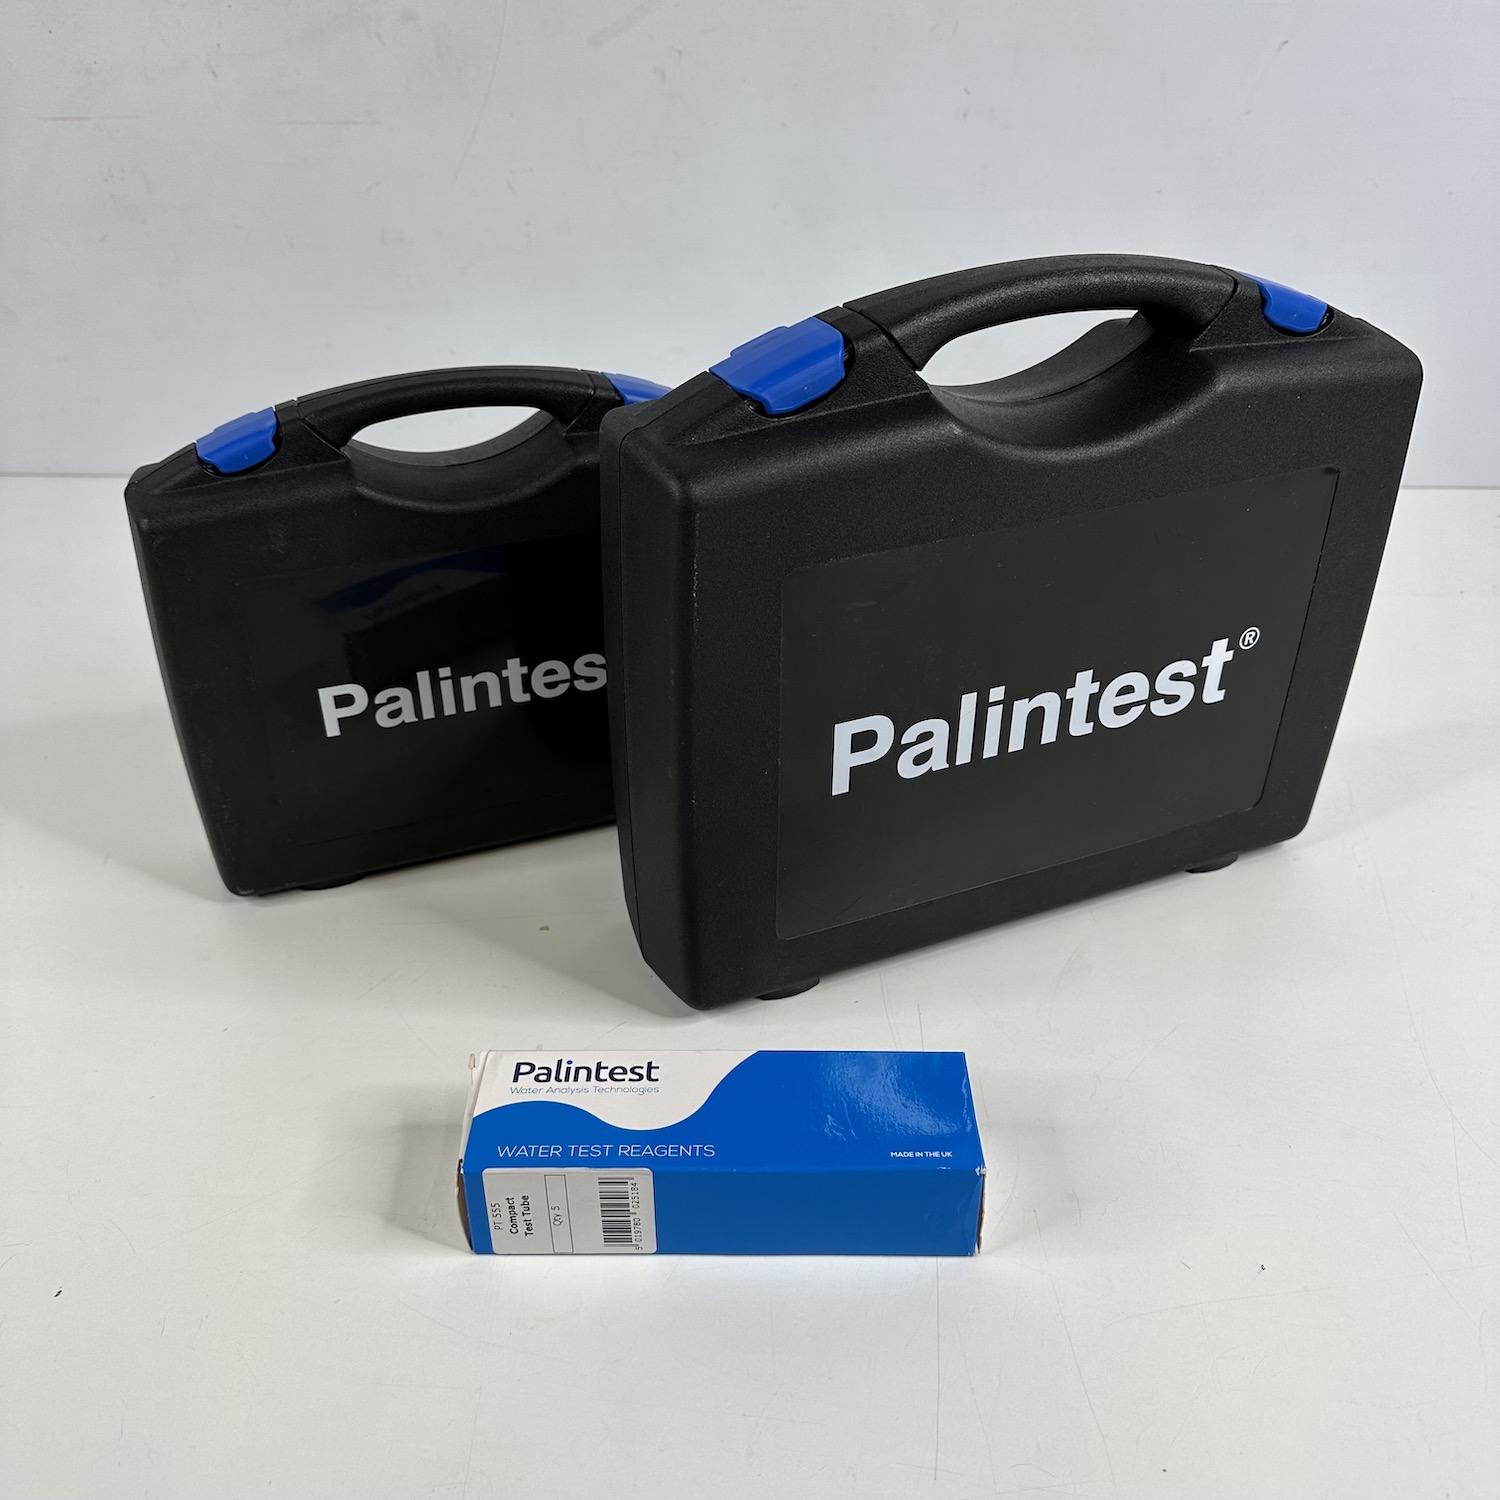 palintest | compact chlorometer duo kit | pth027 | ndf check standards ptc027 | pt555